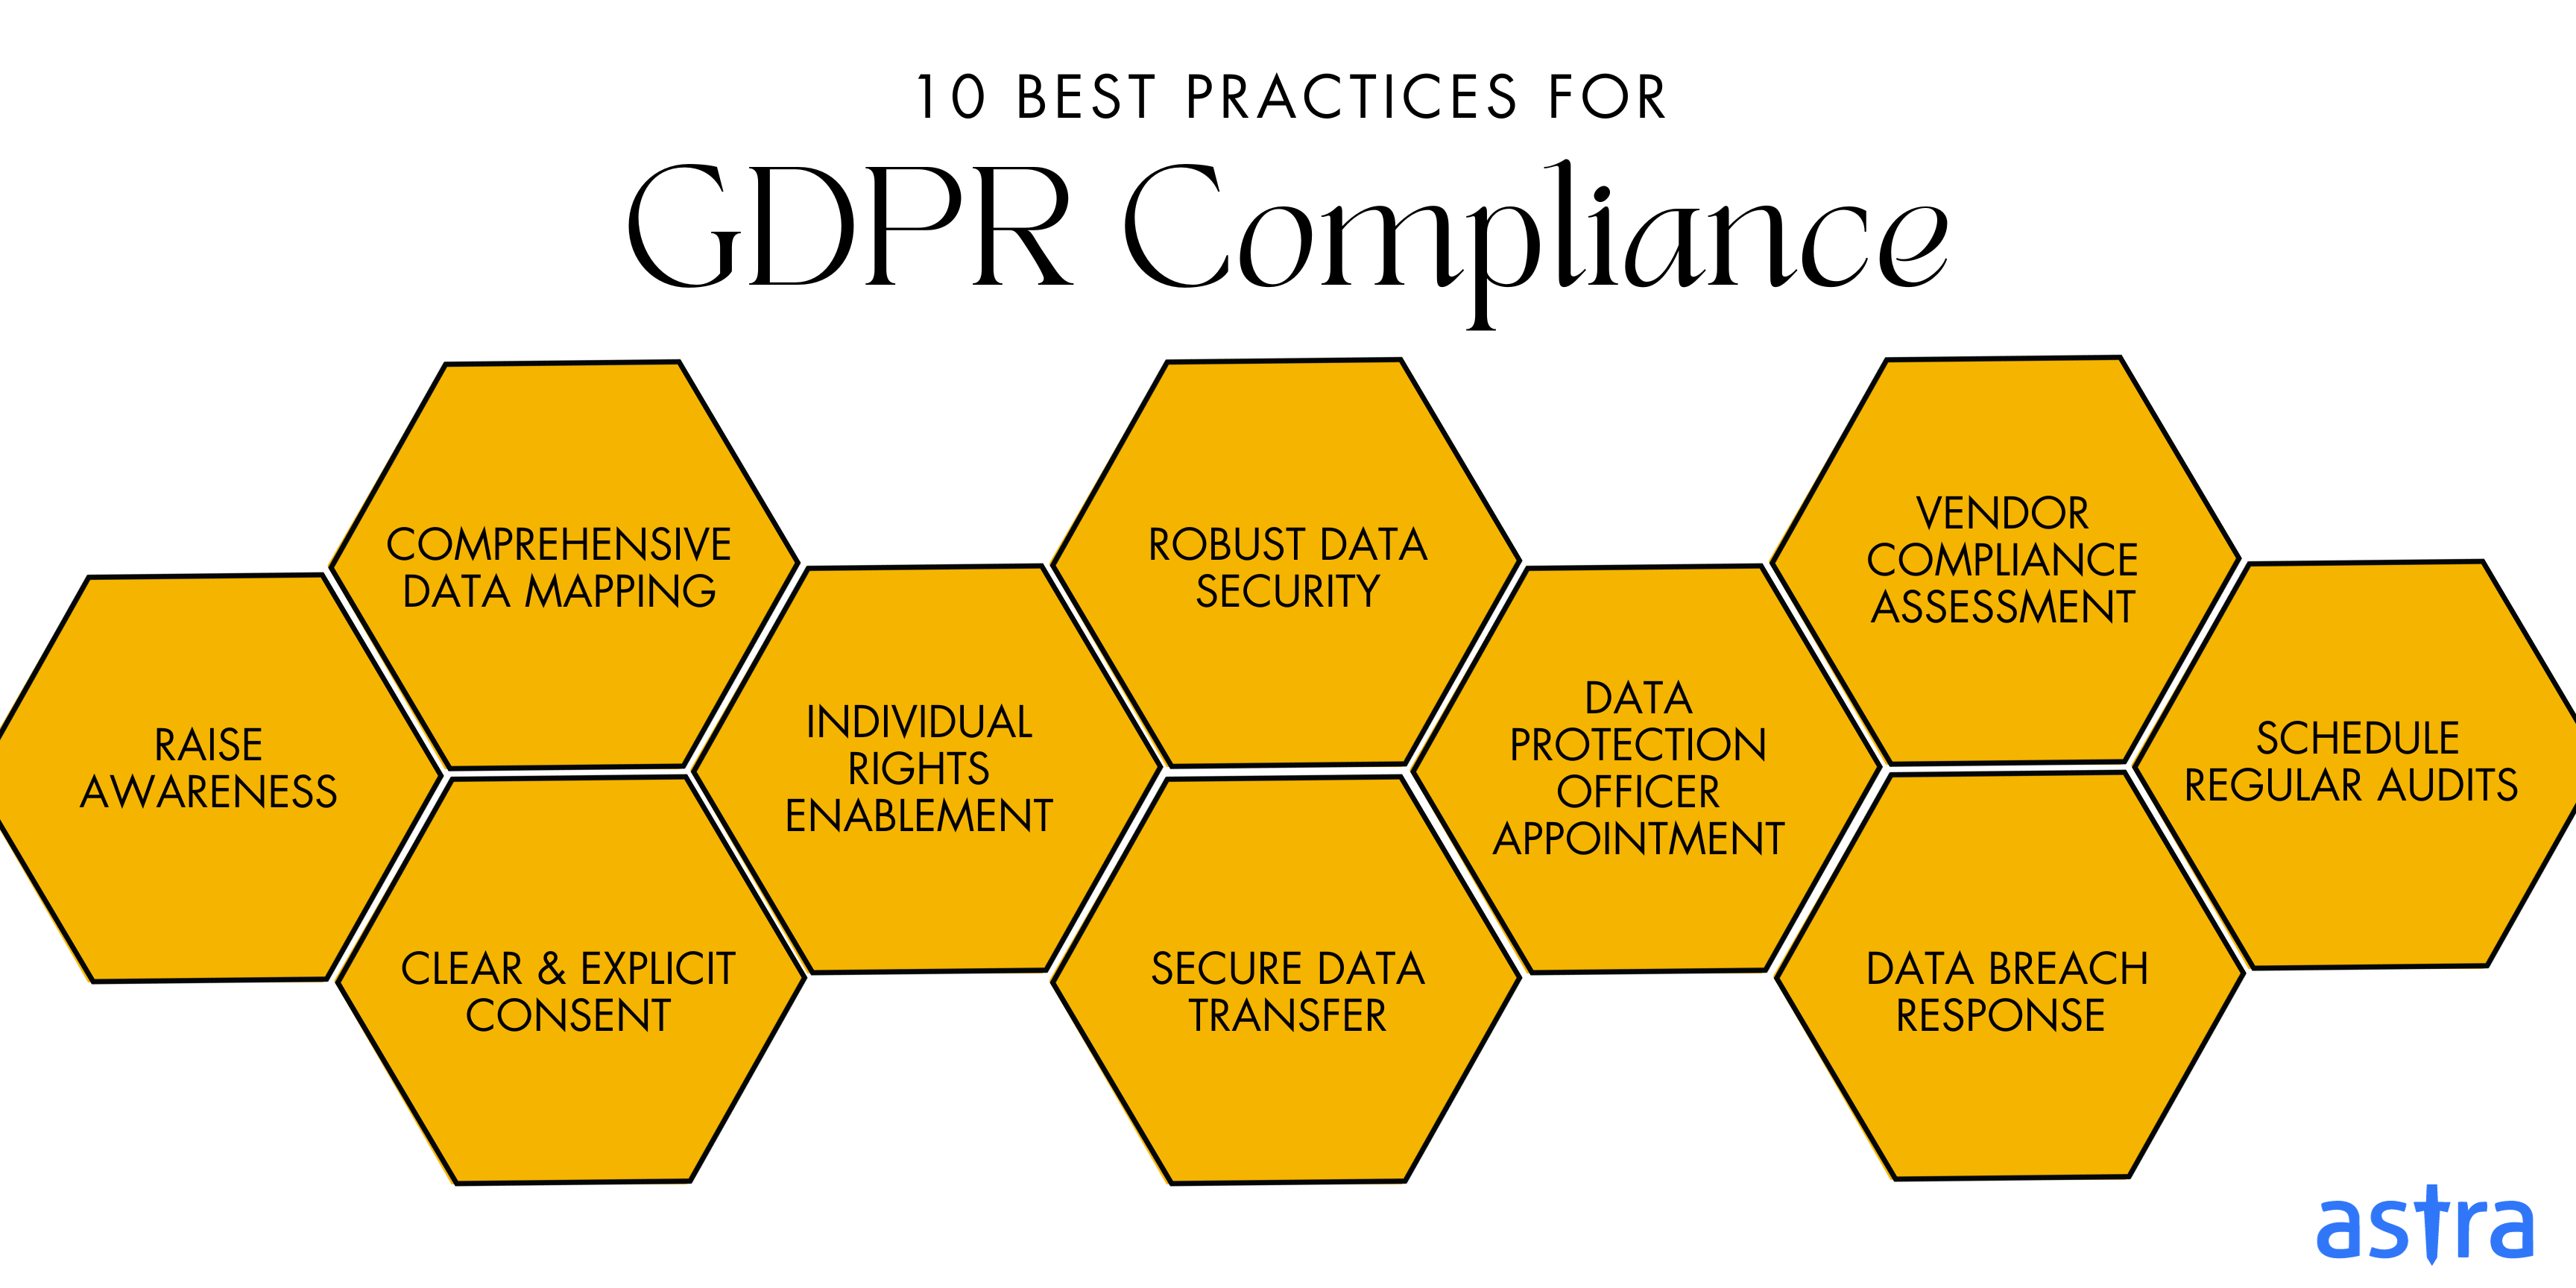 Compliance: GDPR audit report